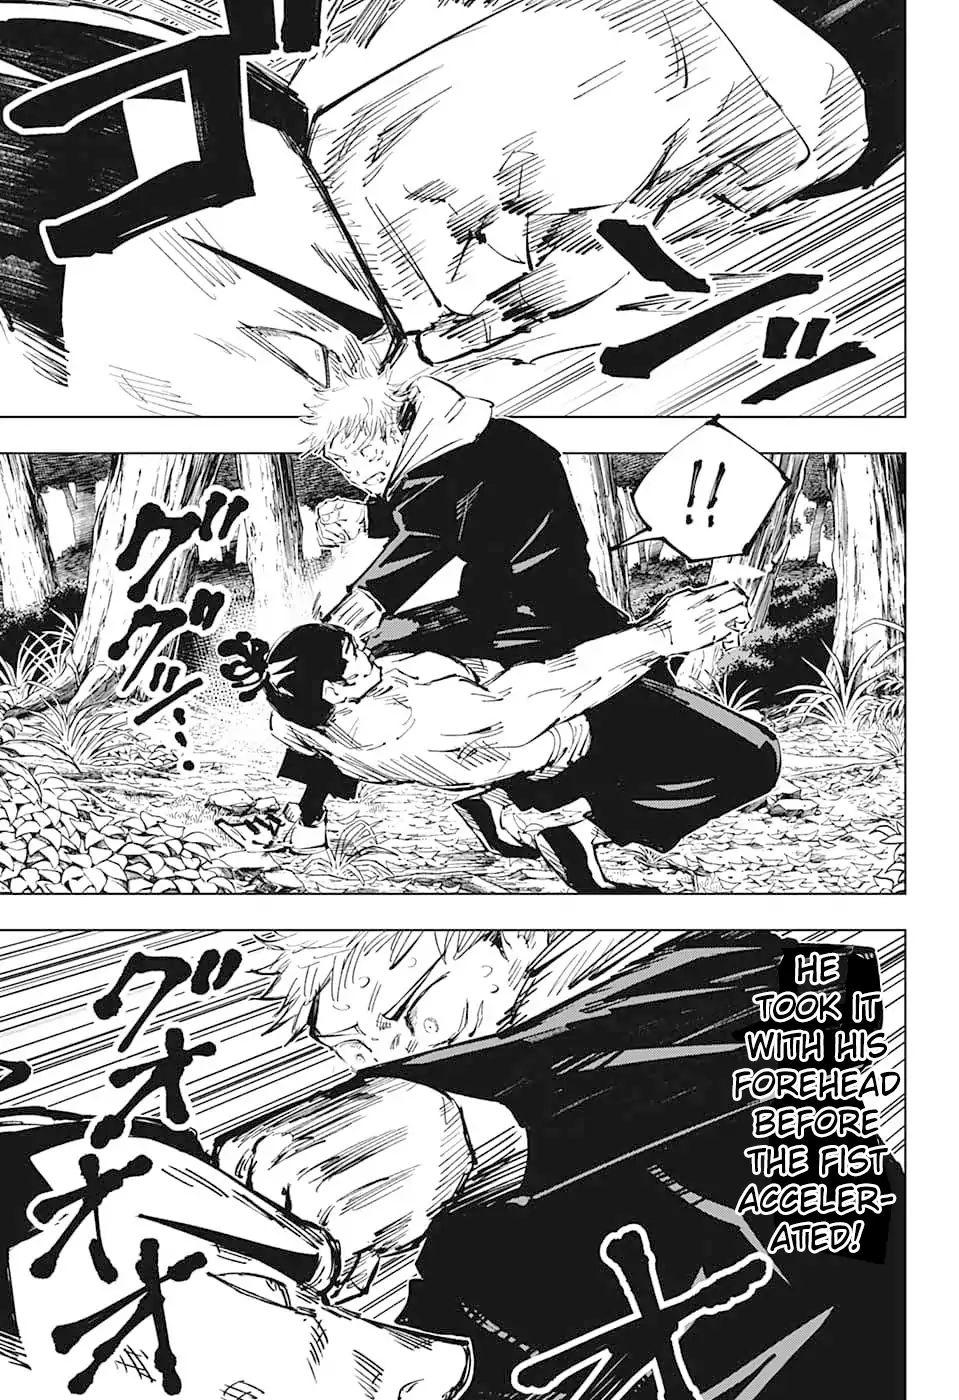 Jujutsu Kaisen Chapter 37: Exchange Festival With The Kyoto School - Team Battle 4 page 7 - Mangakakalot